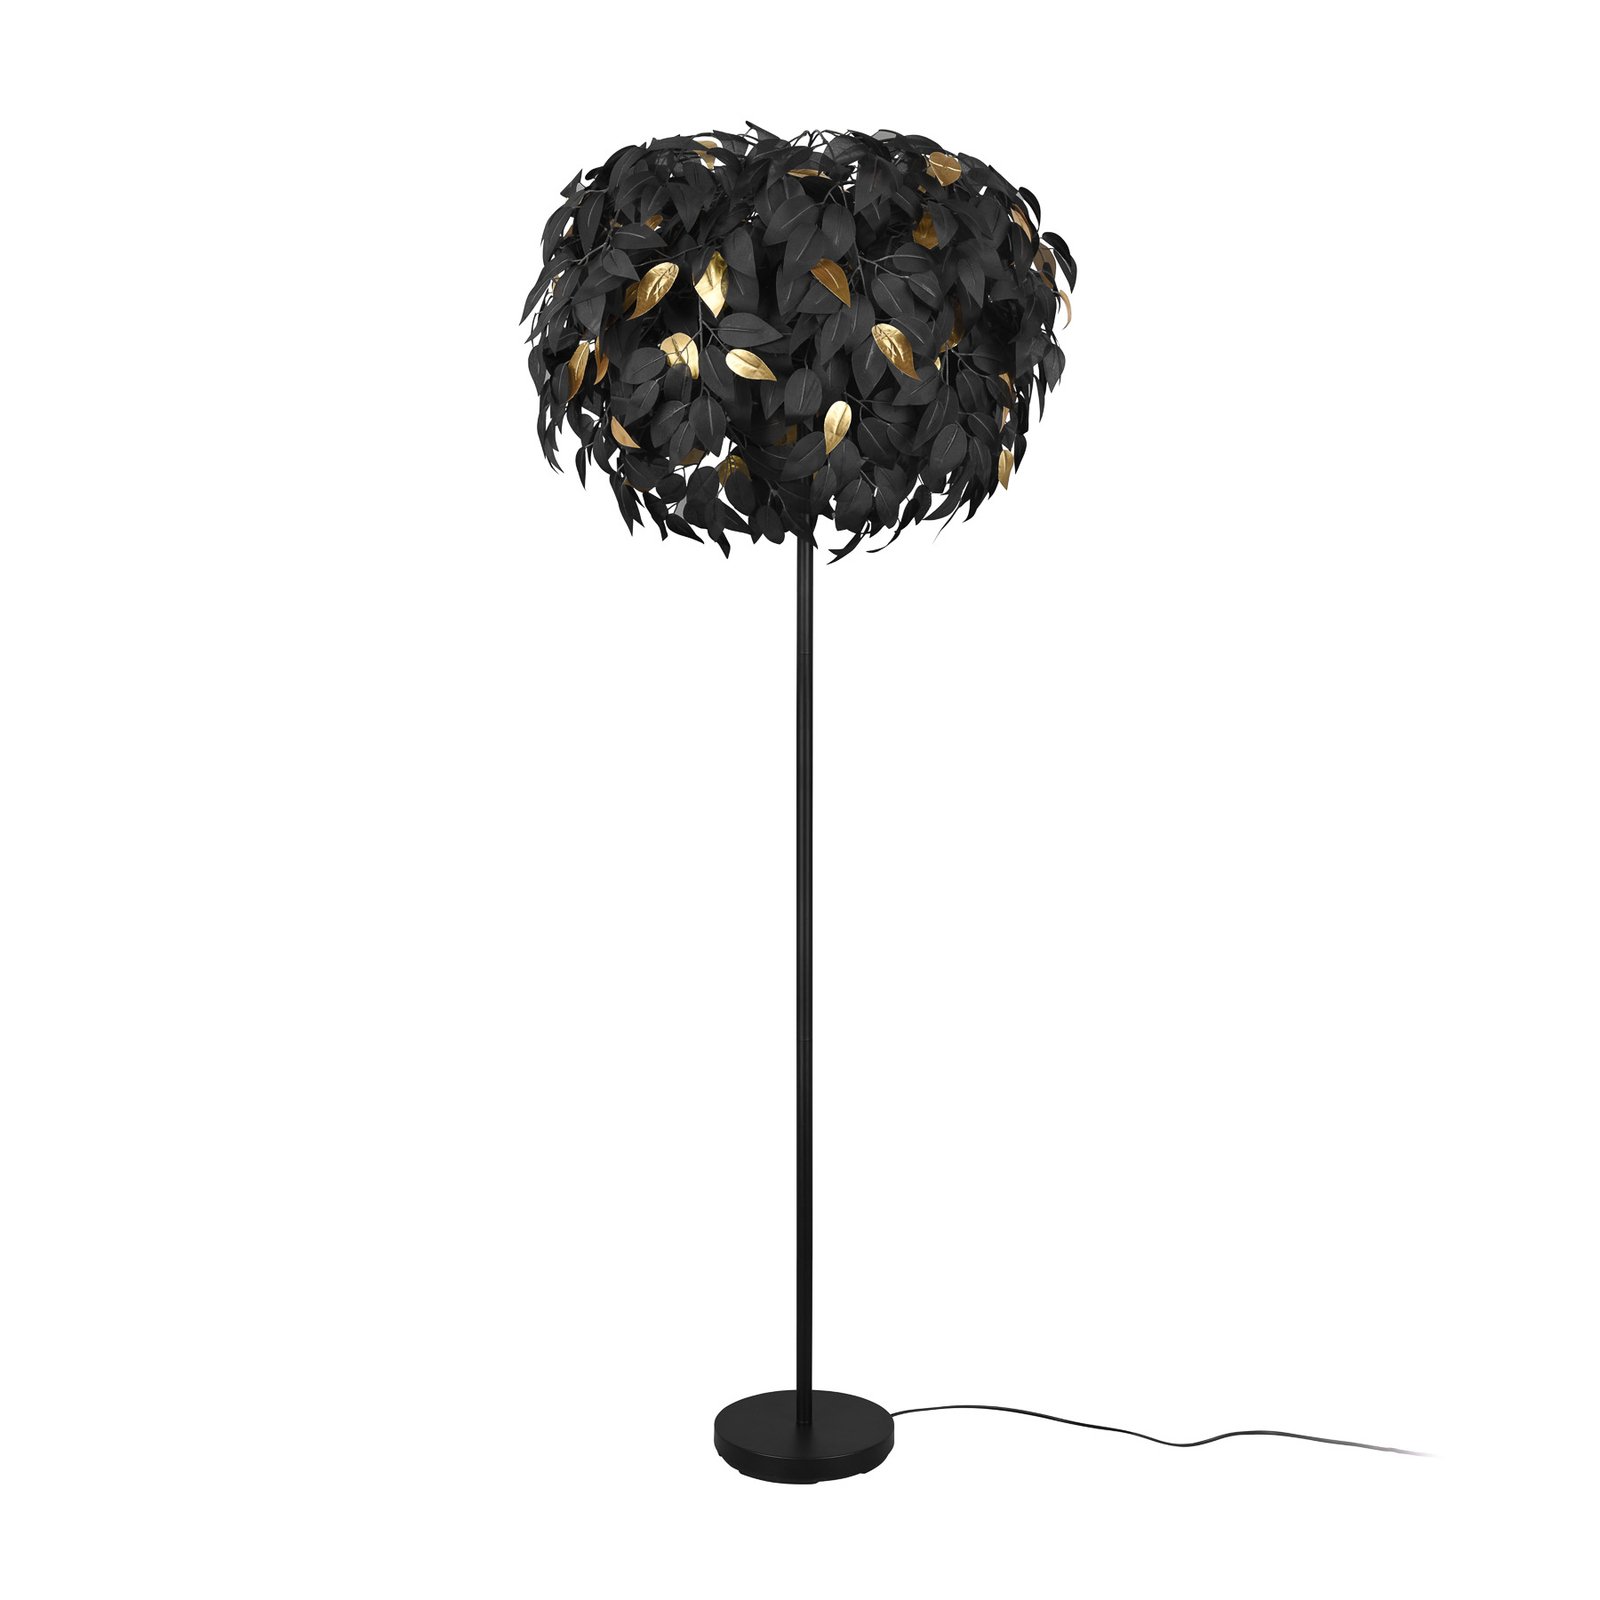 Leavy golvlampa, svart/guld, höjd 180 cm, plast